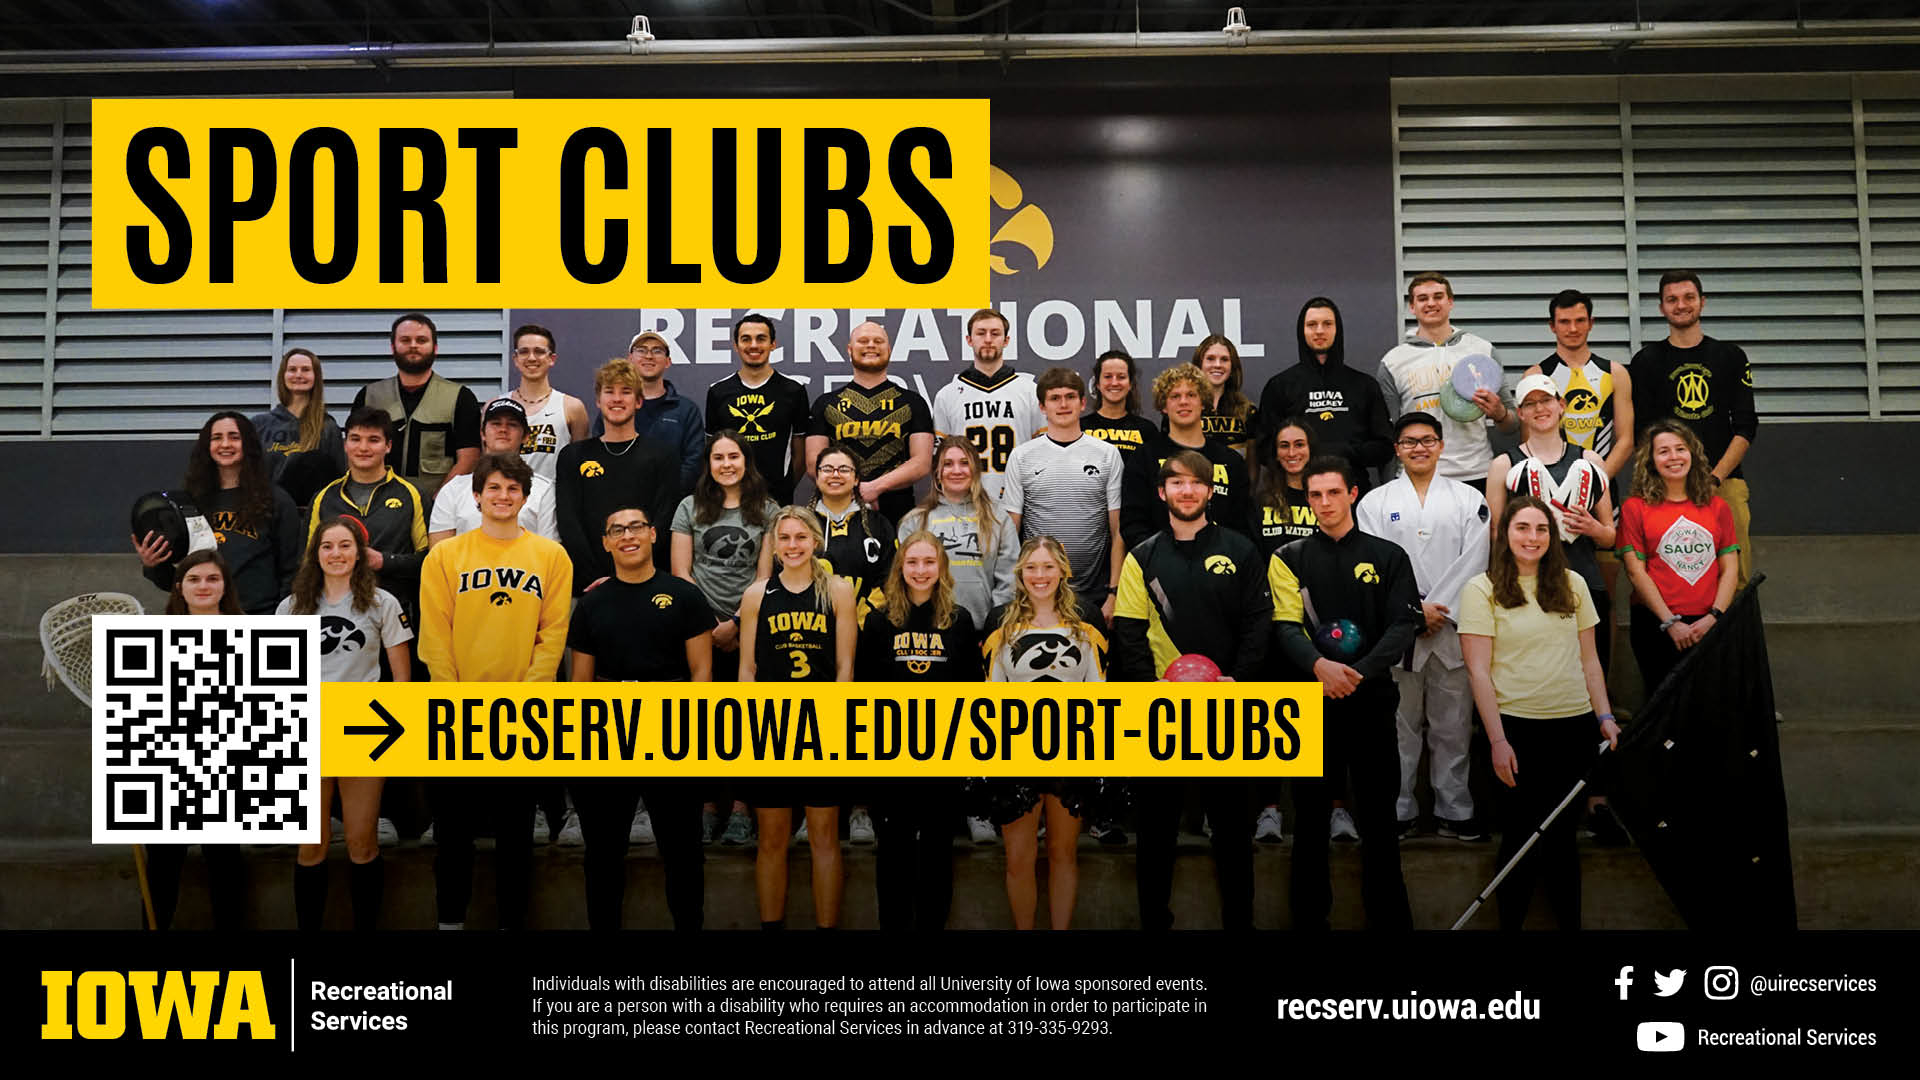 recserv.uiowa.edu/sport-clubs